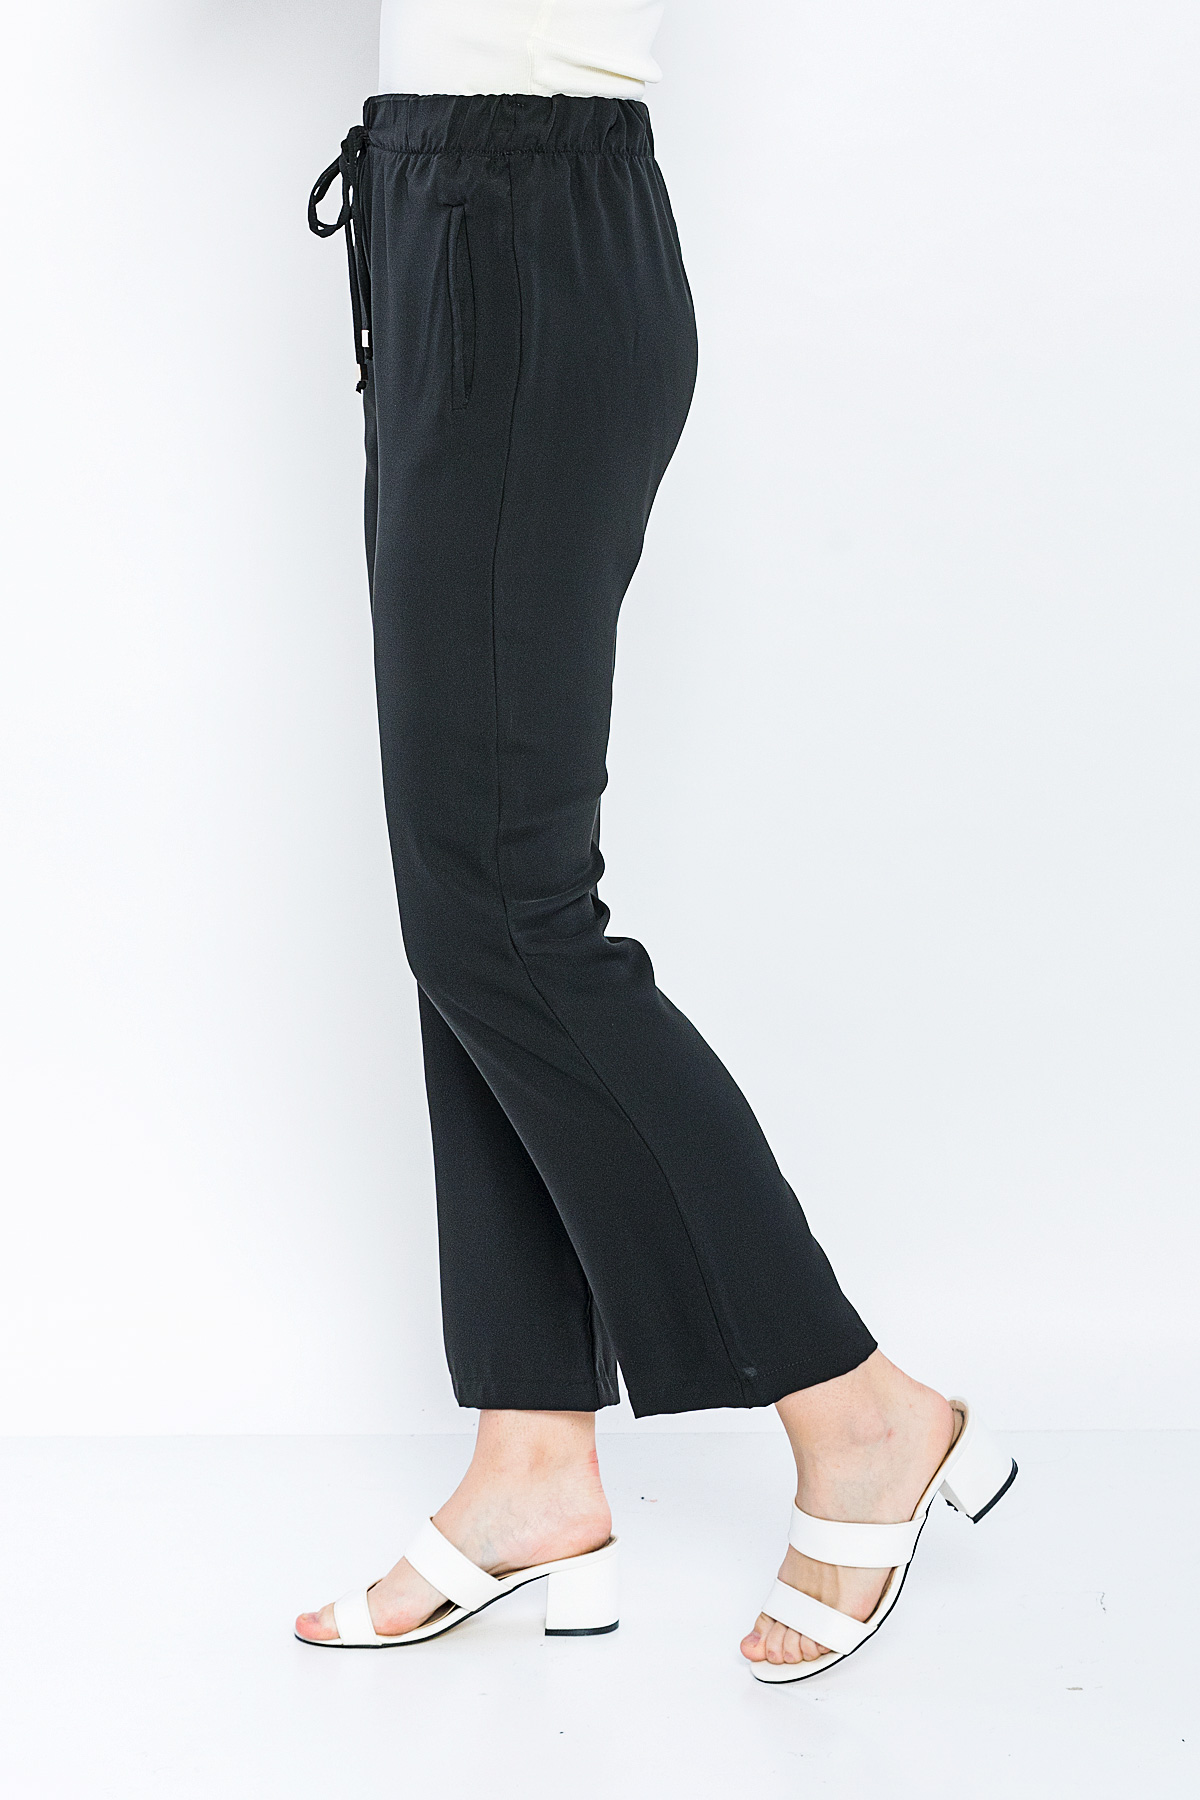 Kadın Siyah Rahat Kesim Saten Kumaş Pantolon resmi